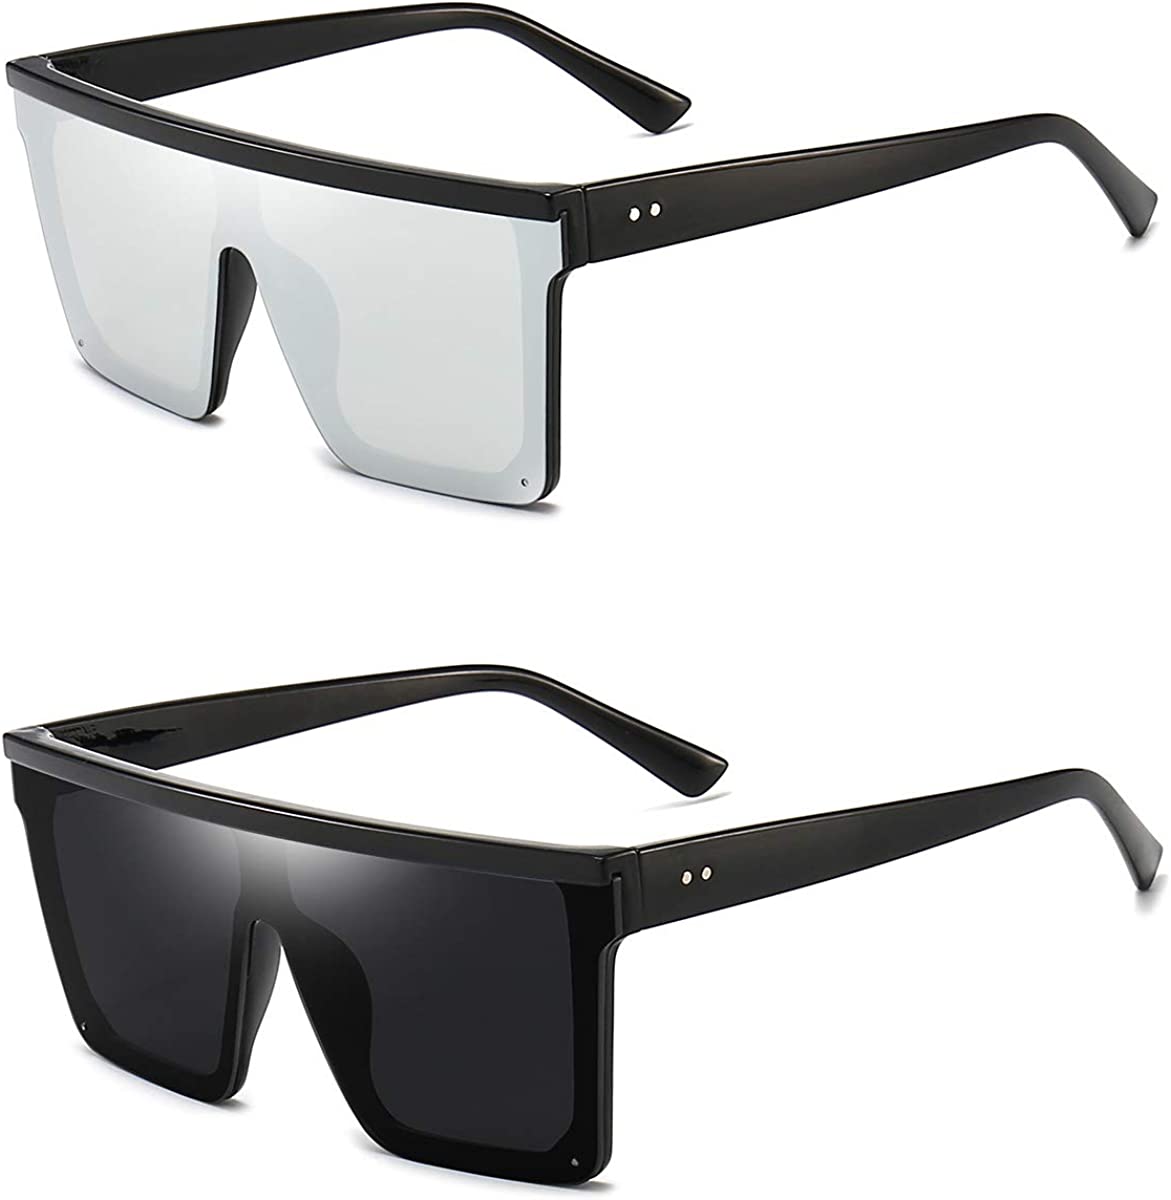 2 Pairs Fashion Oversized Flat Top Sunglasses Siamese Lens Sunglasses Unisex Square Sunglasses Shades for Men Women 